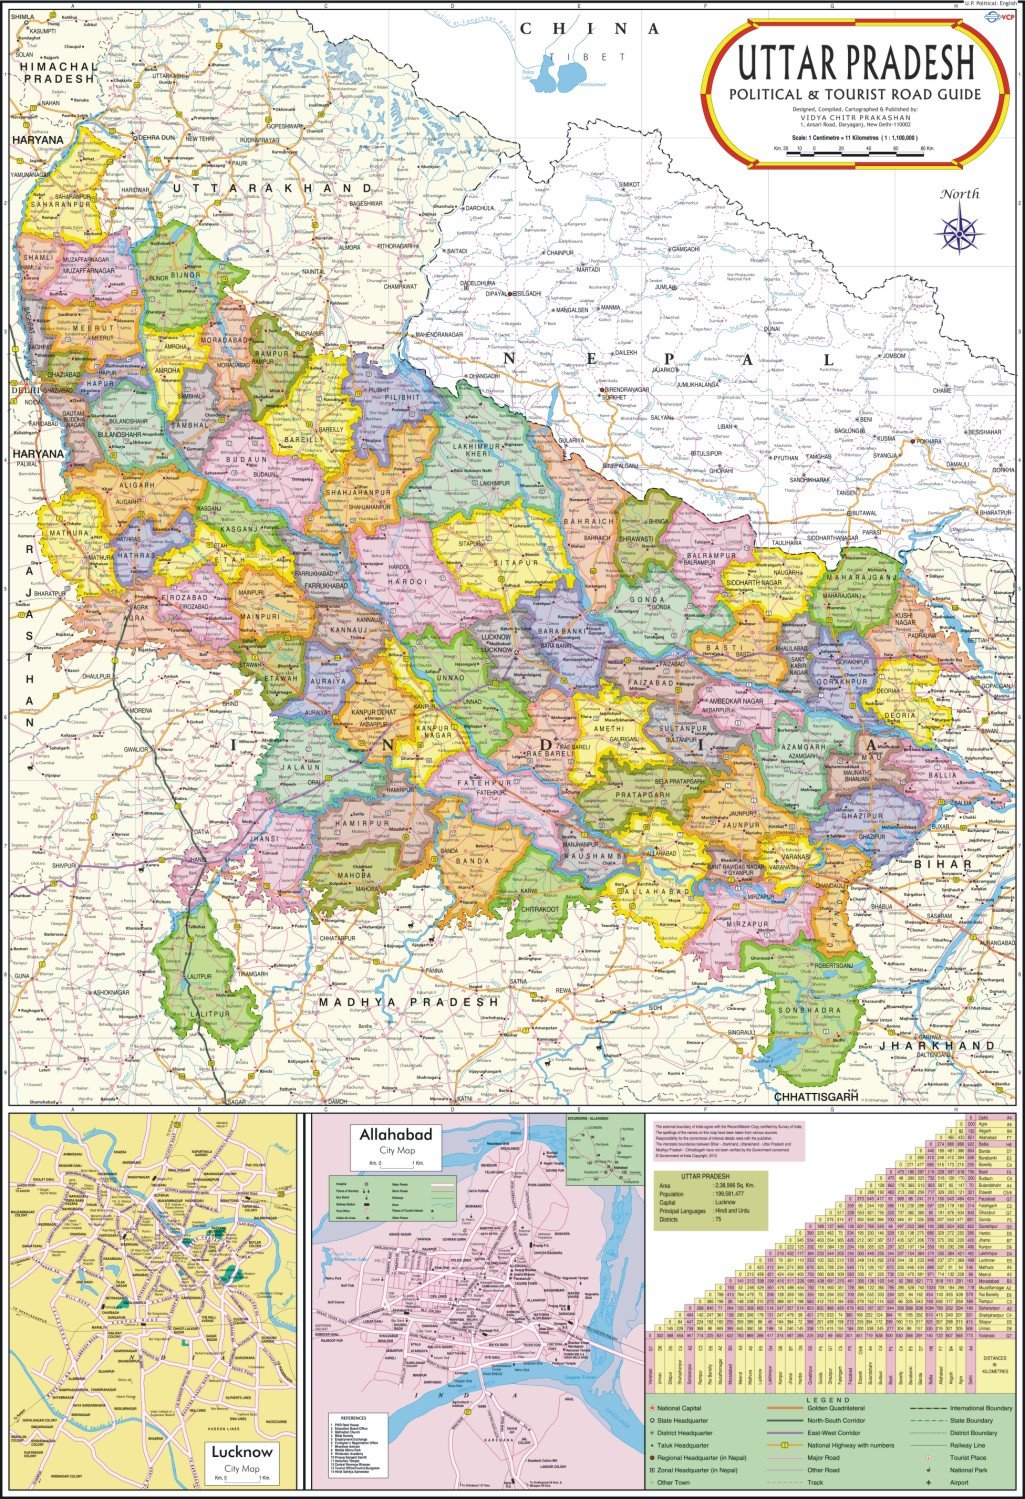 Buy Uttar Pradesh Map. English. Laminated x 70 cm Book Online at Low Prices in India. Uttar Pradesh Map. English. Laminated x 70 cm Reviews & Ratings